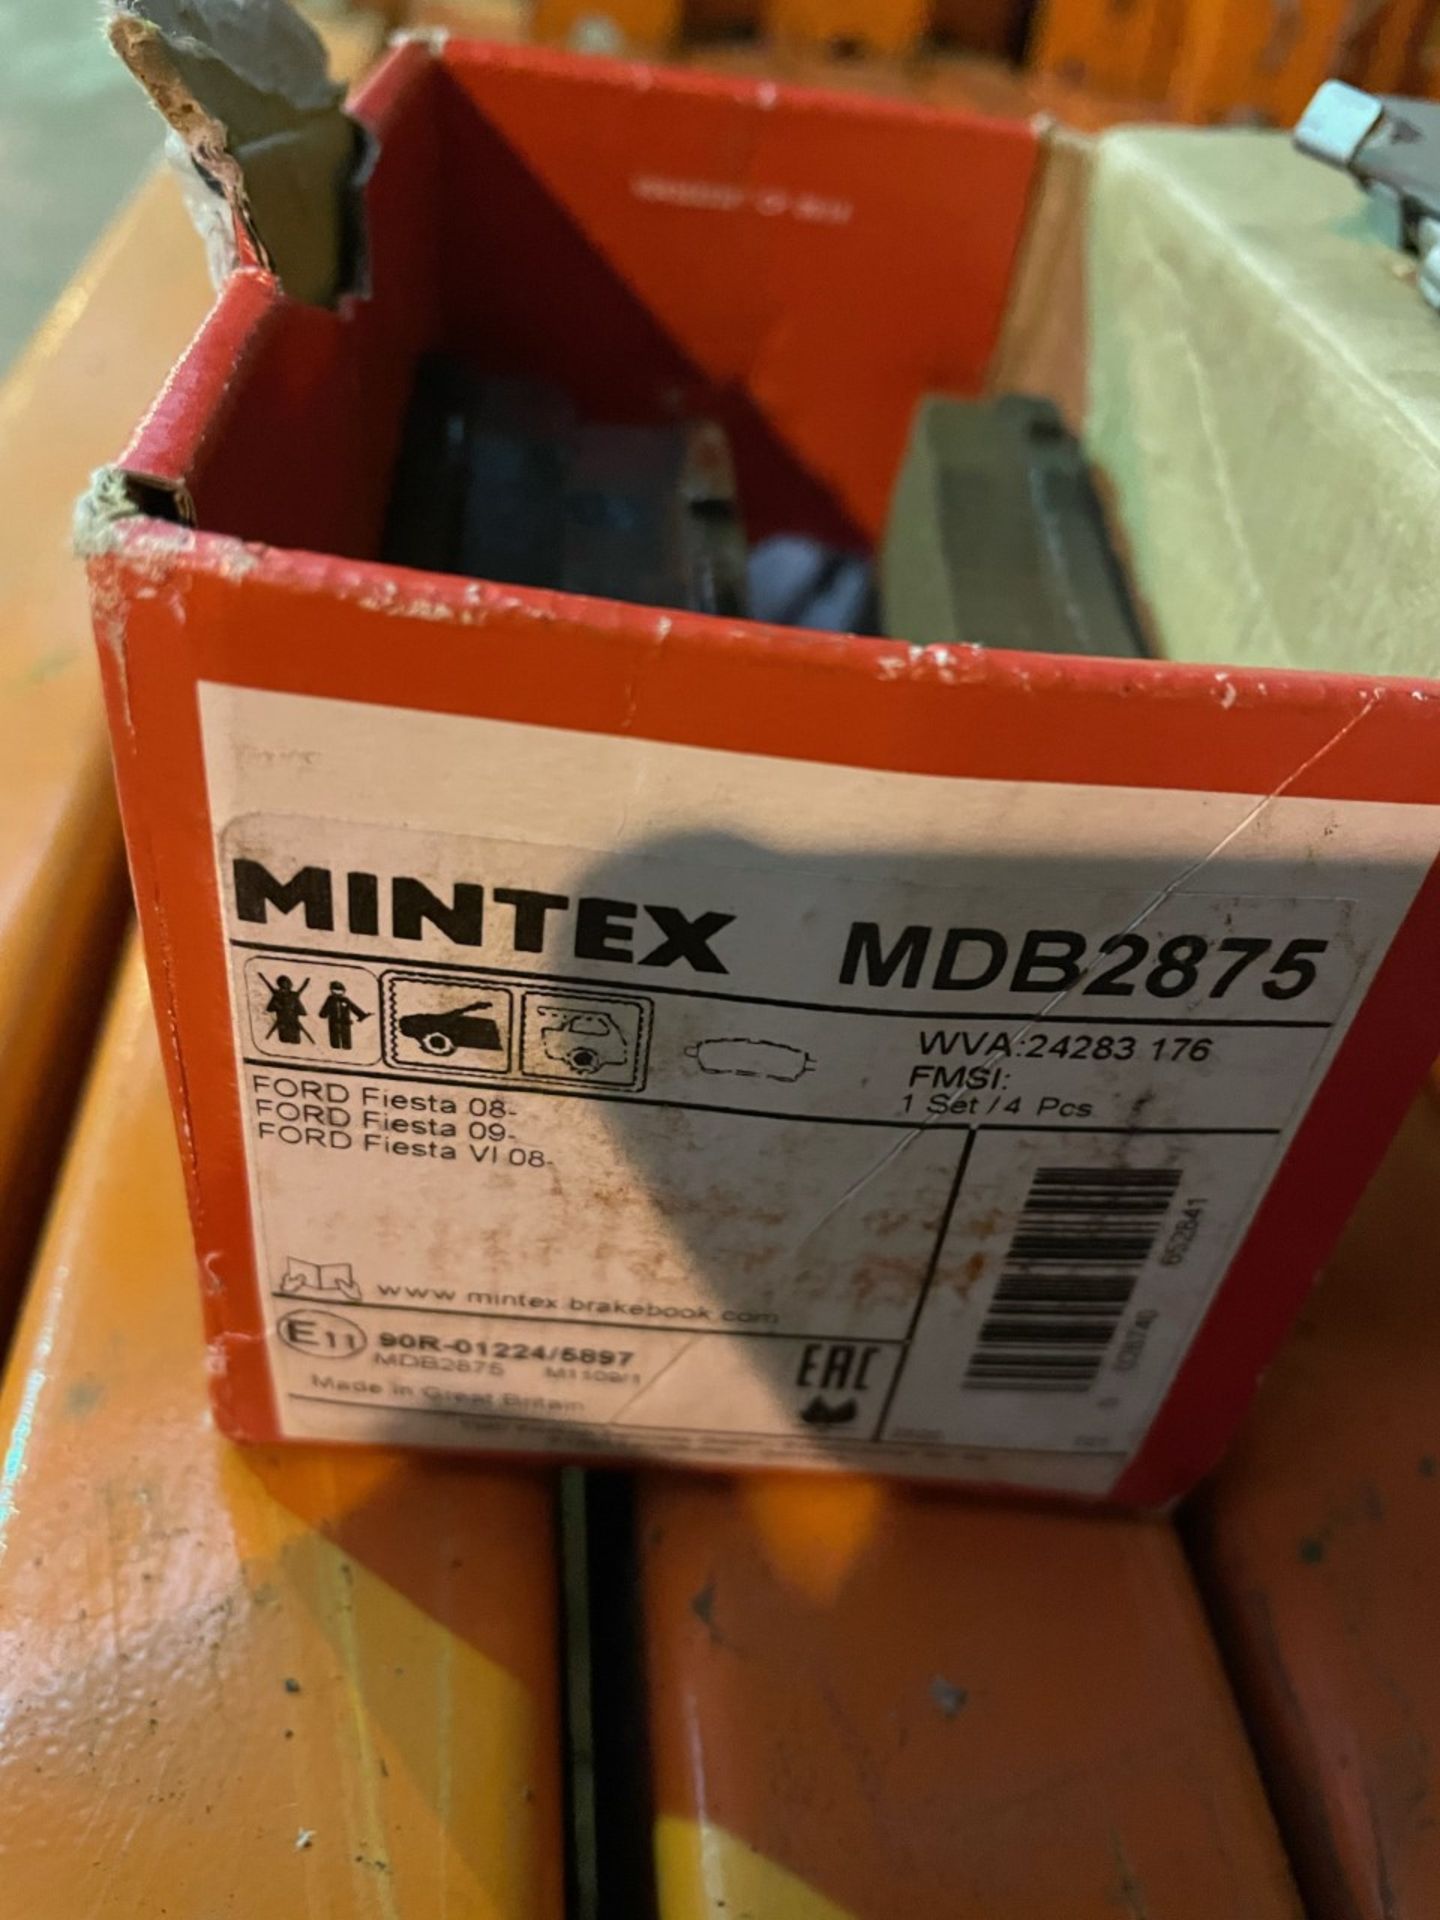 Brand new set of mintex break pads for Ford fiesta 08 onwards MDB2875 set of 4 - Image 2 of 5